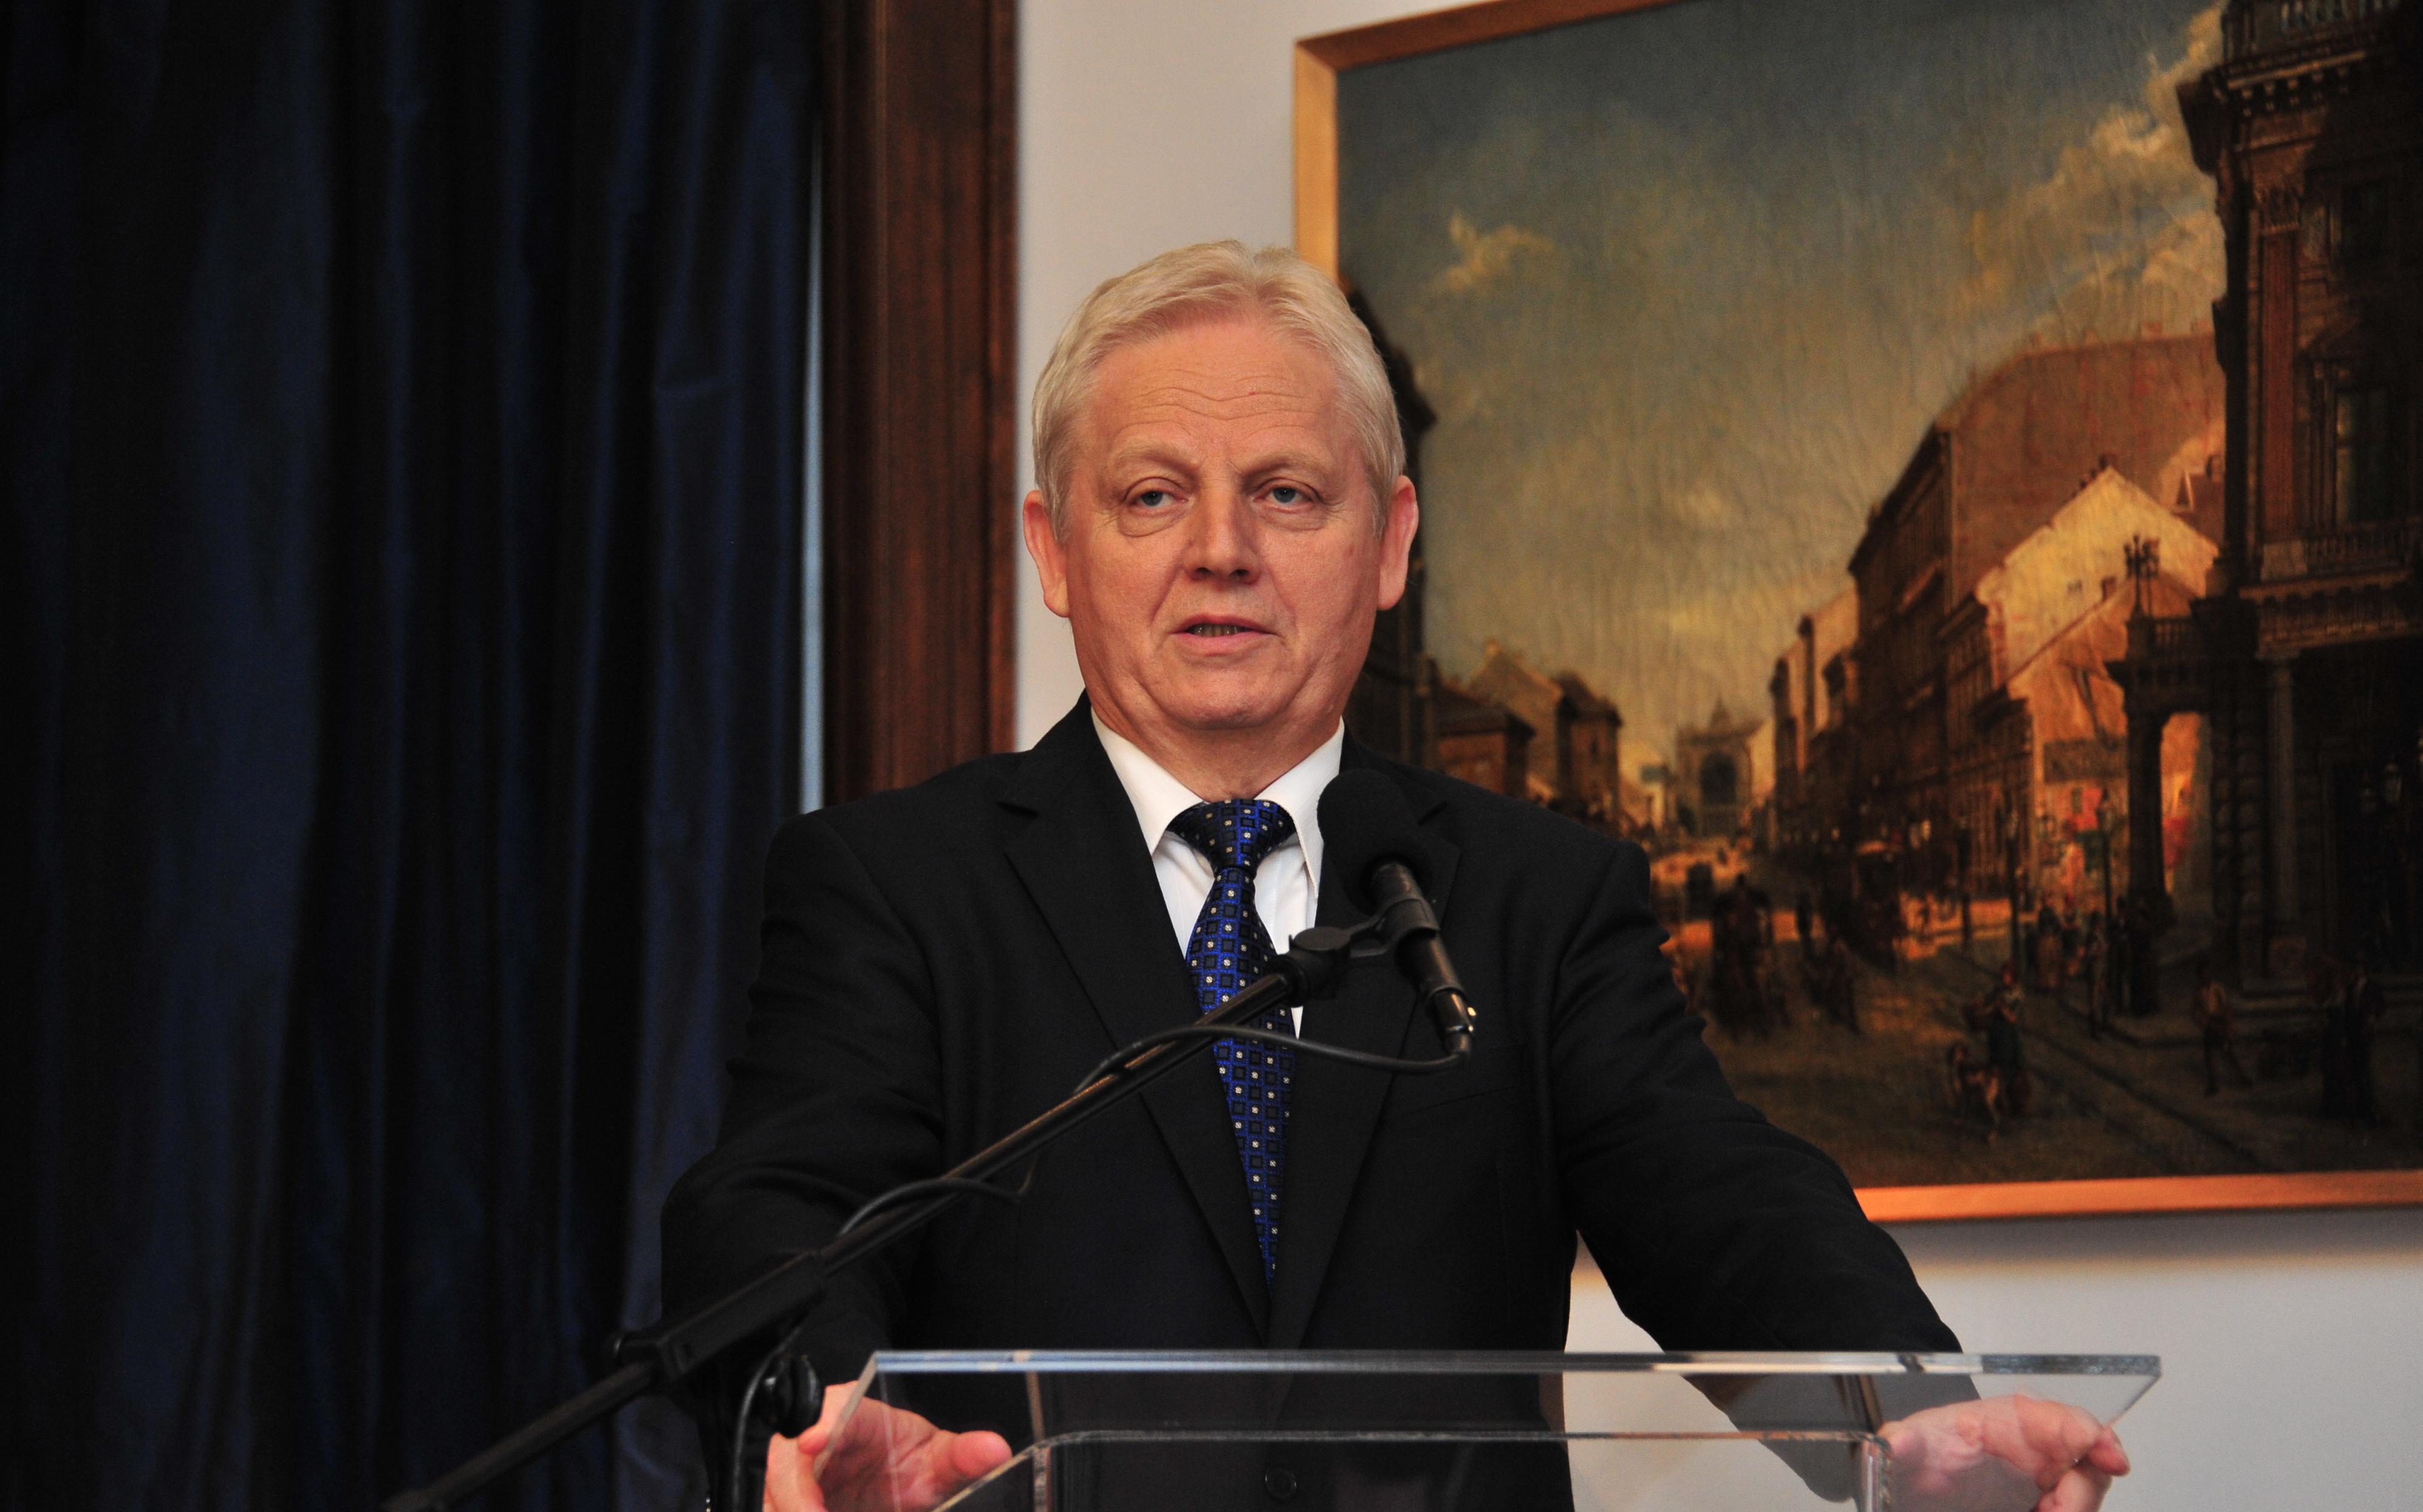 Budapest Mayor István Tarlós Receives Award In Vienna